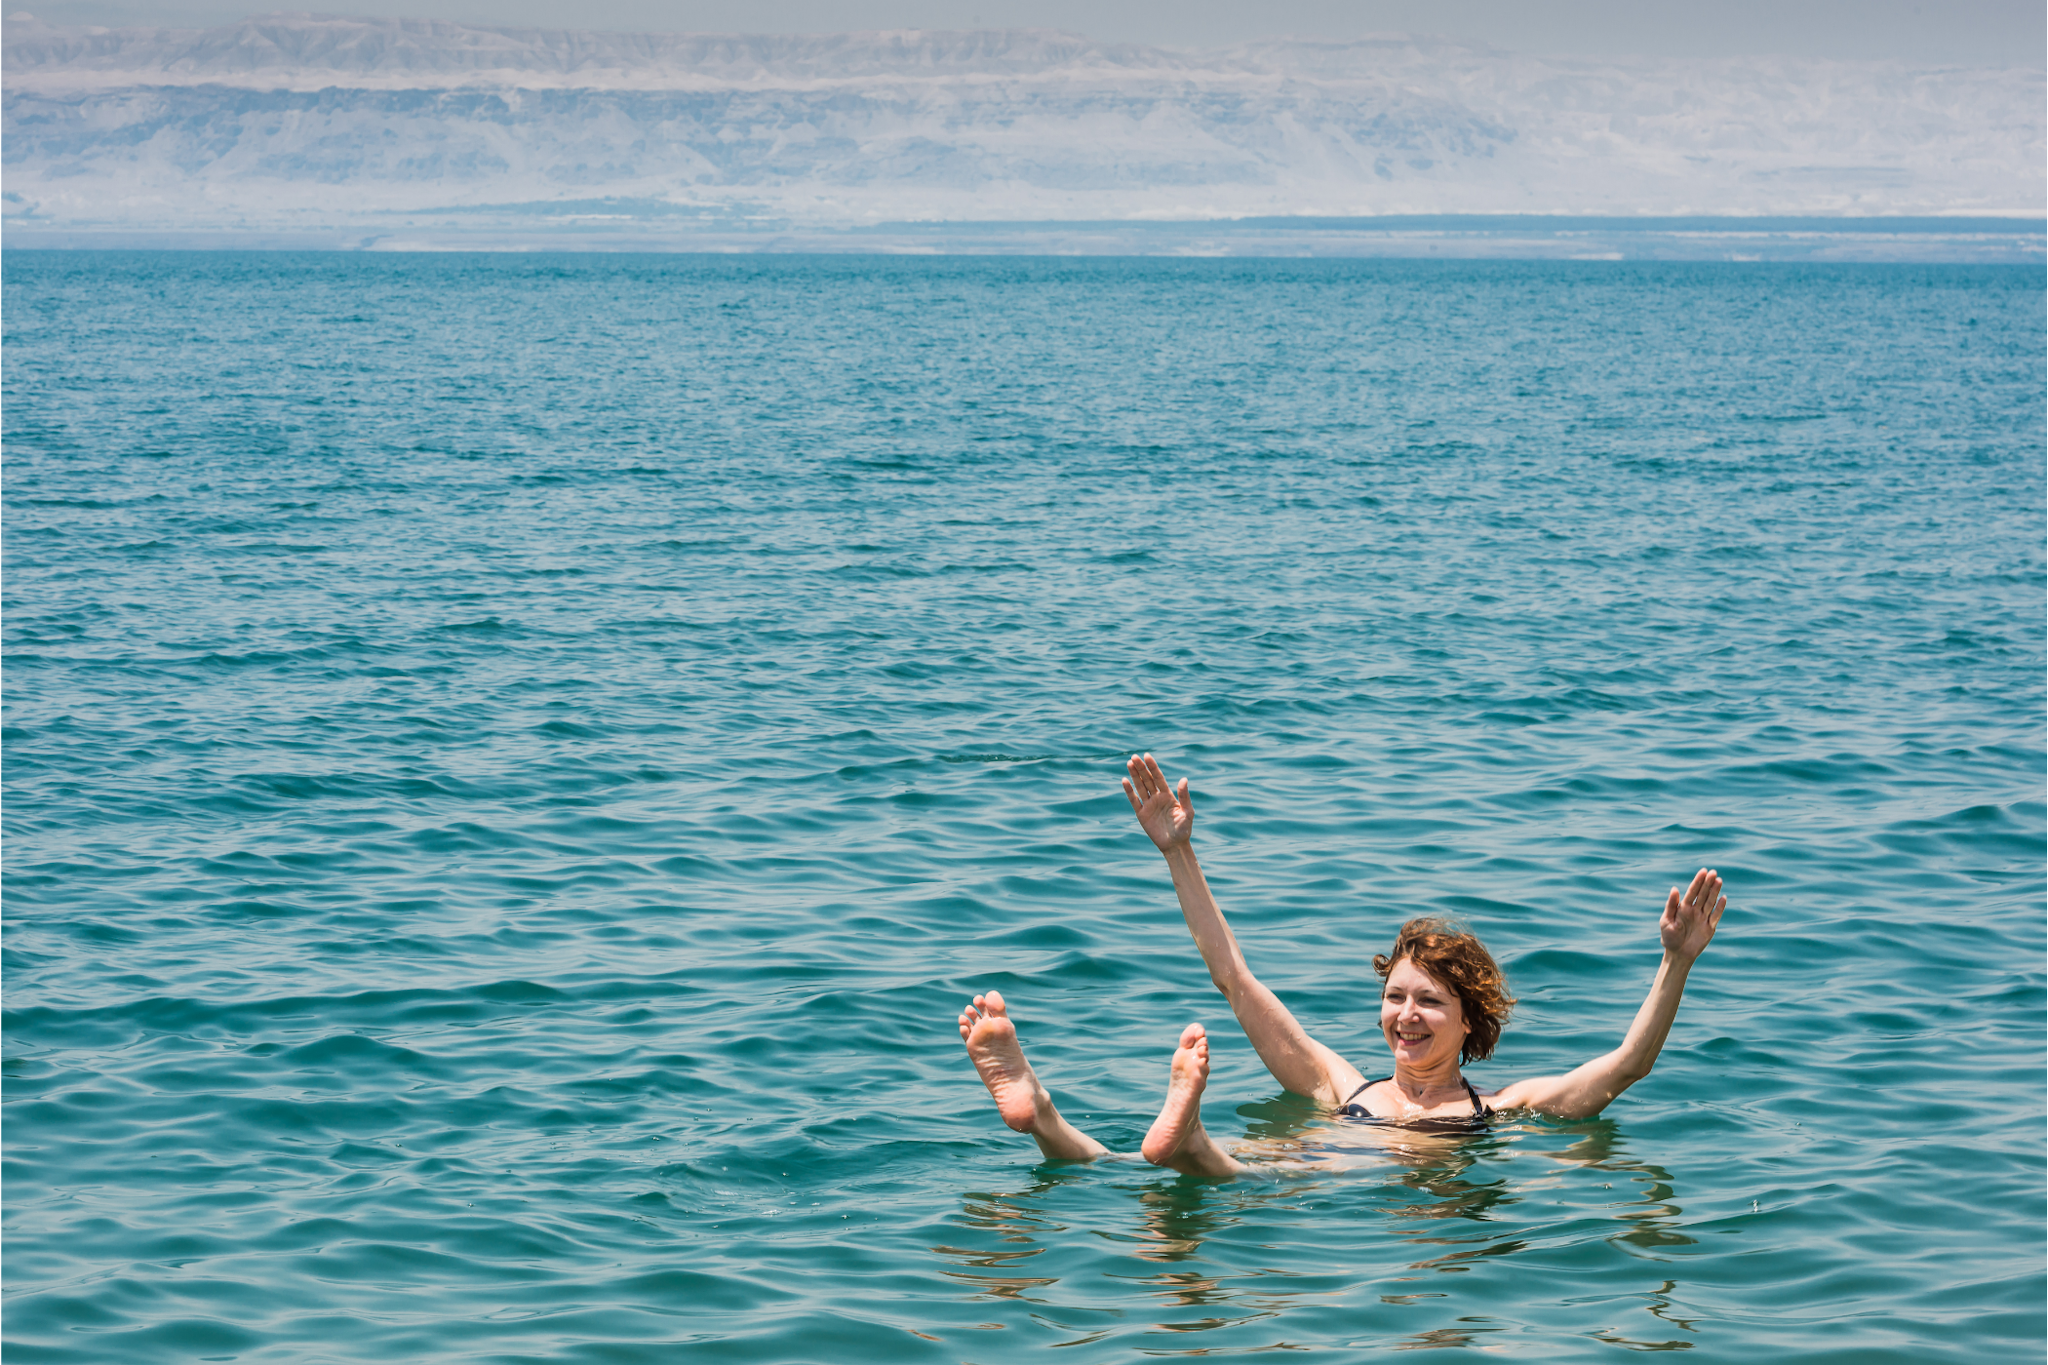 Woman floating in the Dead Sea, Jordan
Canva - https://www.canva.com/photos/MADCAhLNDyo-one-woman-swimming-bathing-in-dead-sea-jordan/